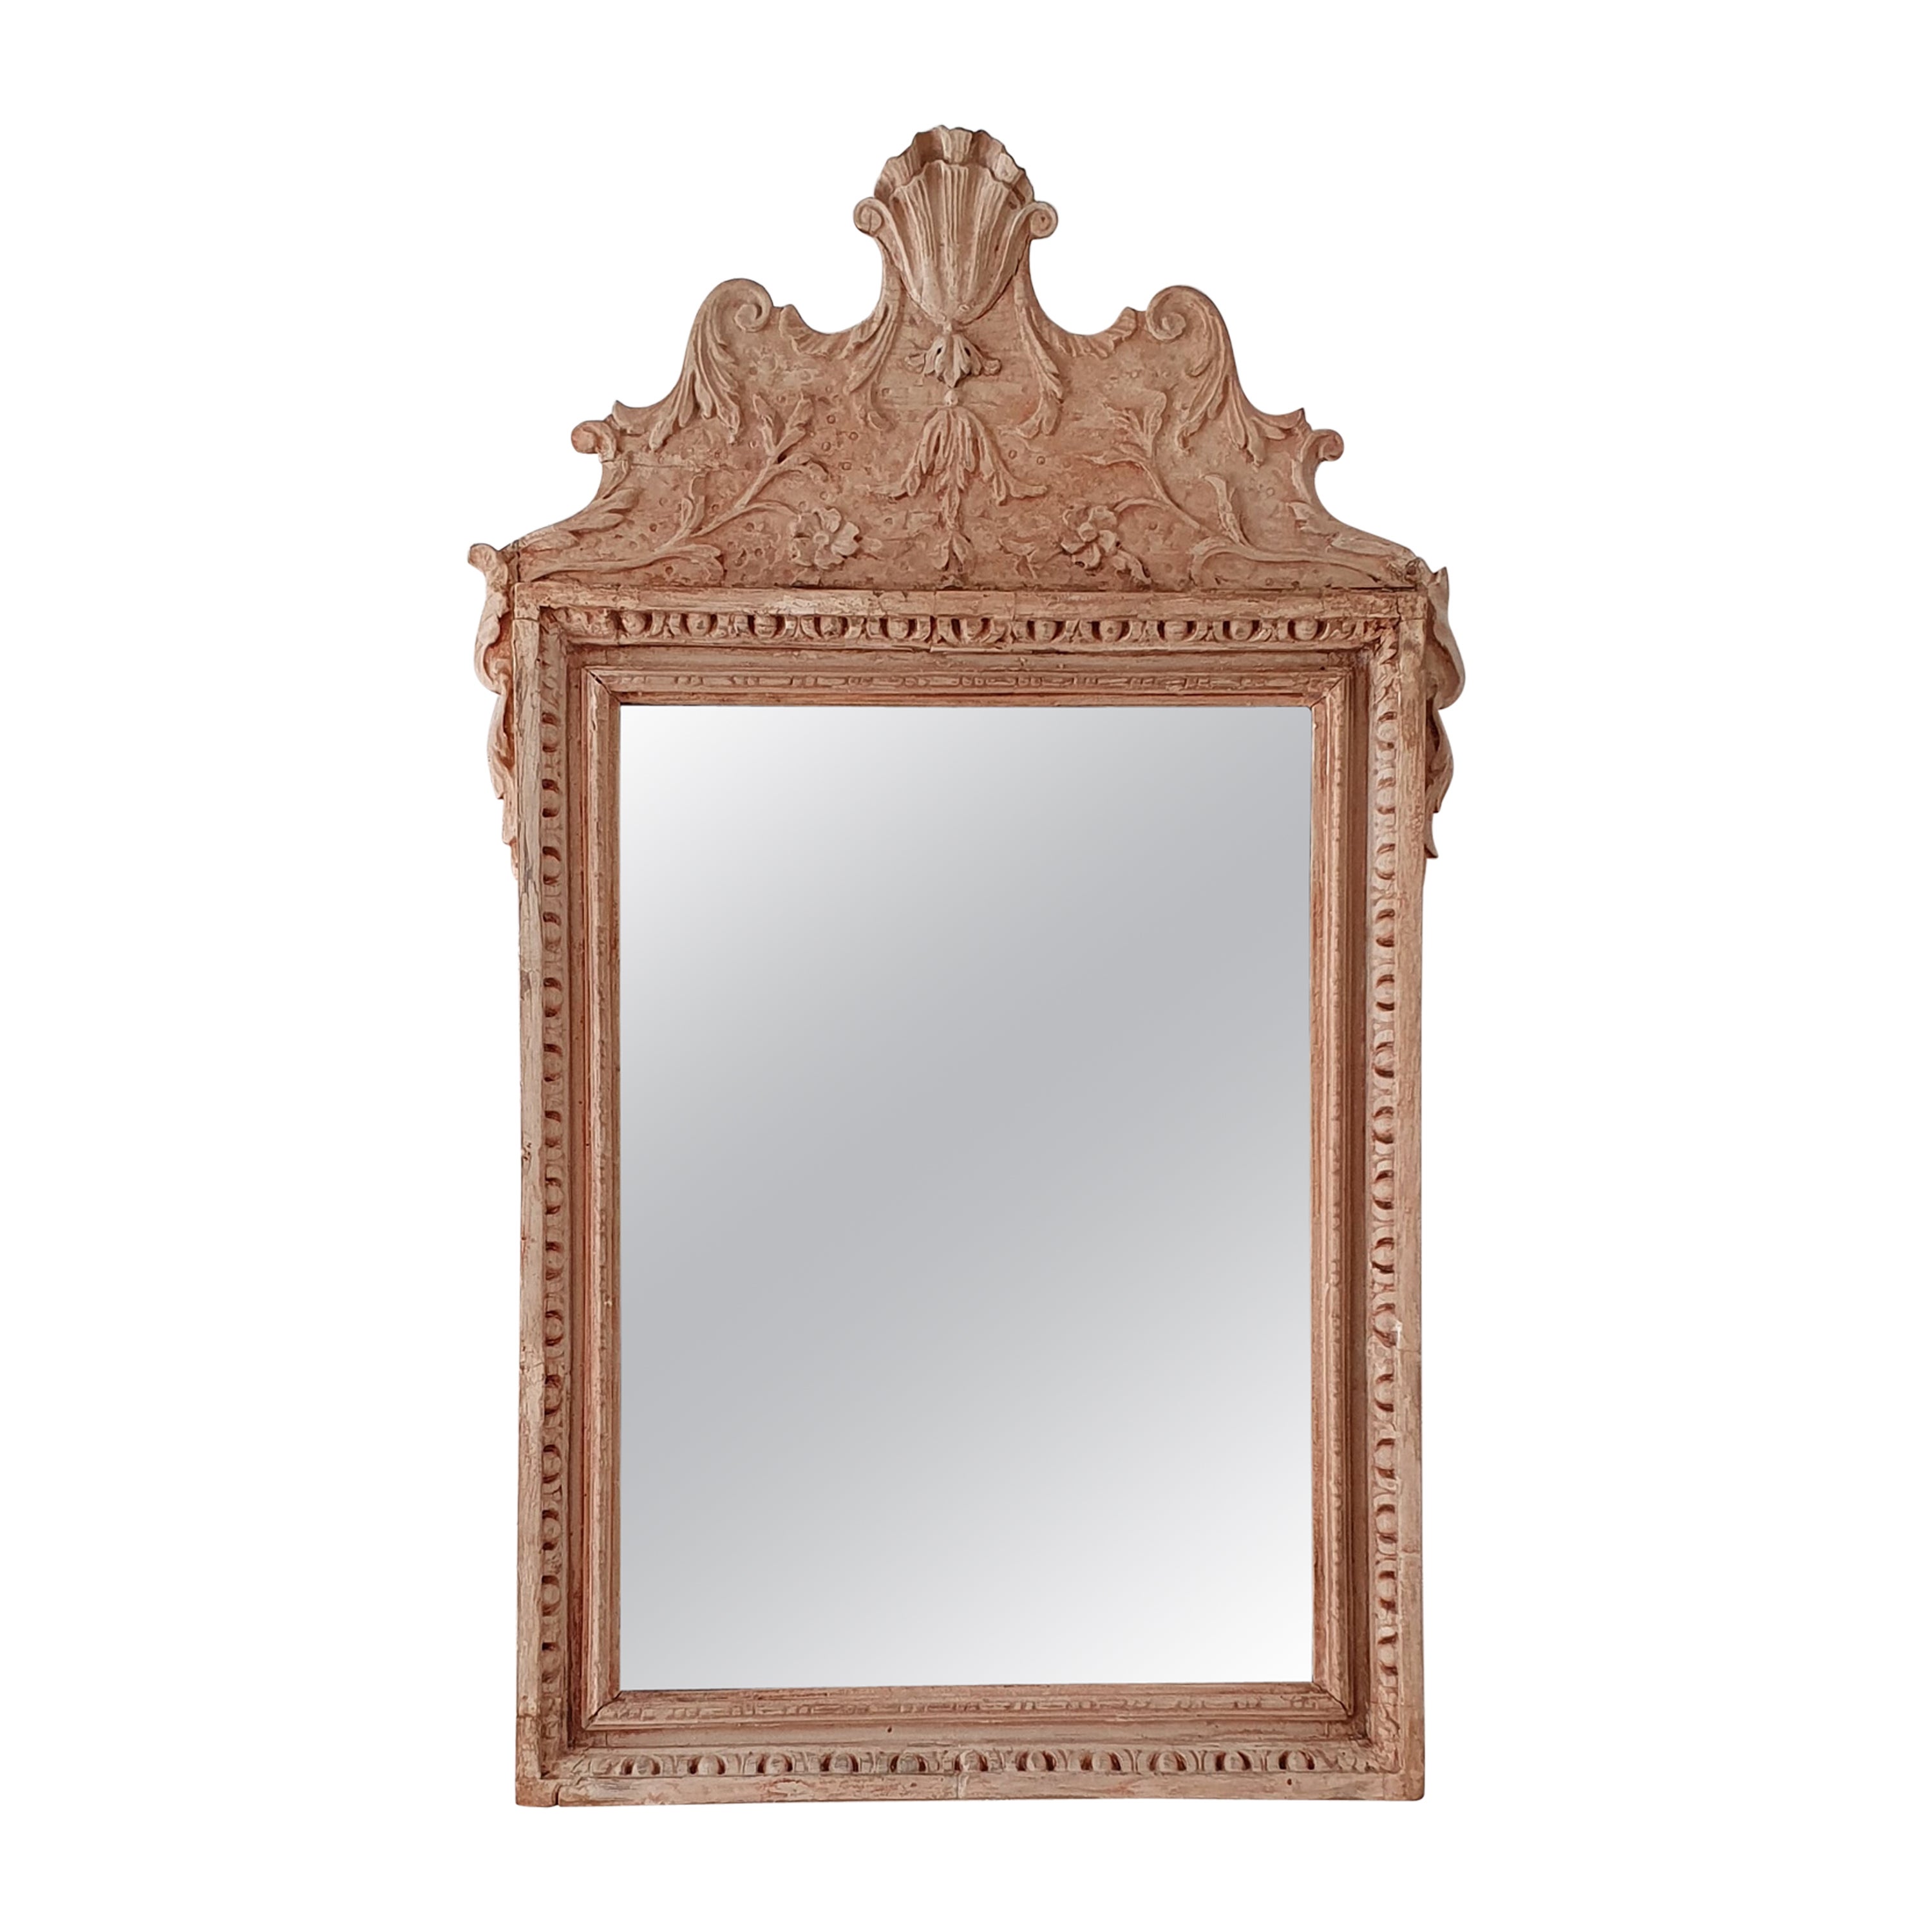 19th Century English Wall Mirror